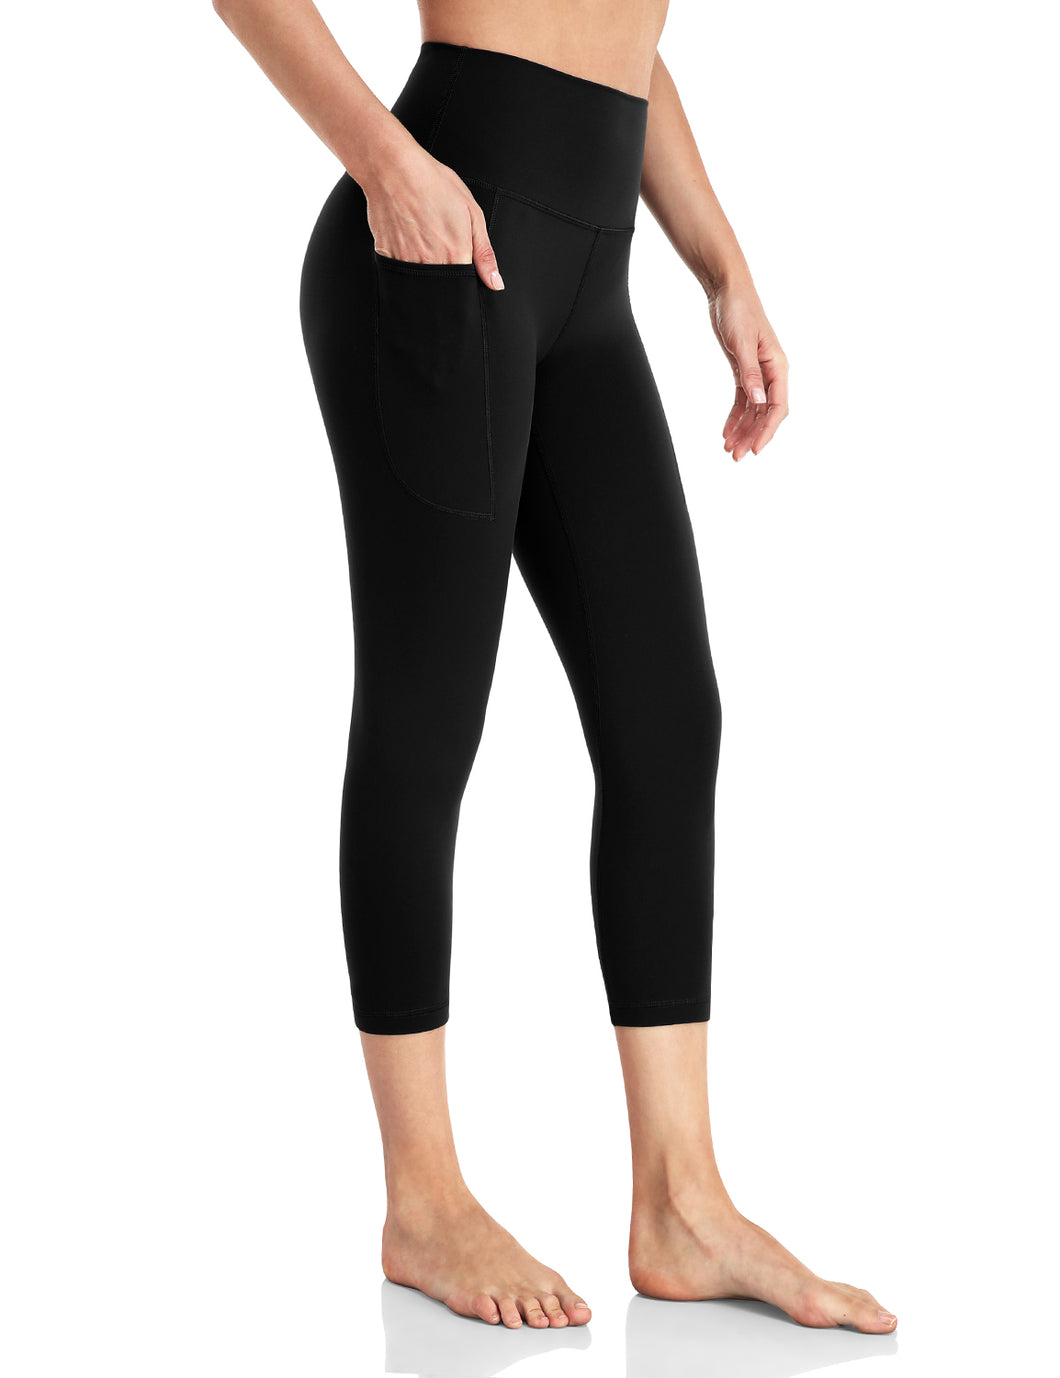 Ewedoos Leggings with Pockets for Women Yoga Pants Women High Waisted  Leggings for Women Tummy Control Athletic Leggings Black at Amazon Women's  Clothing store